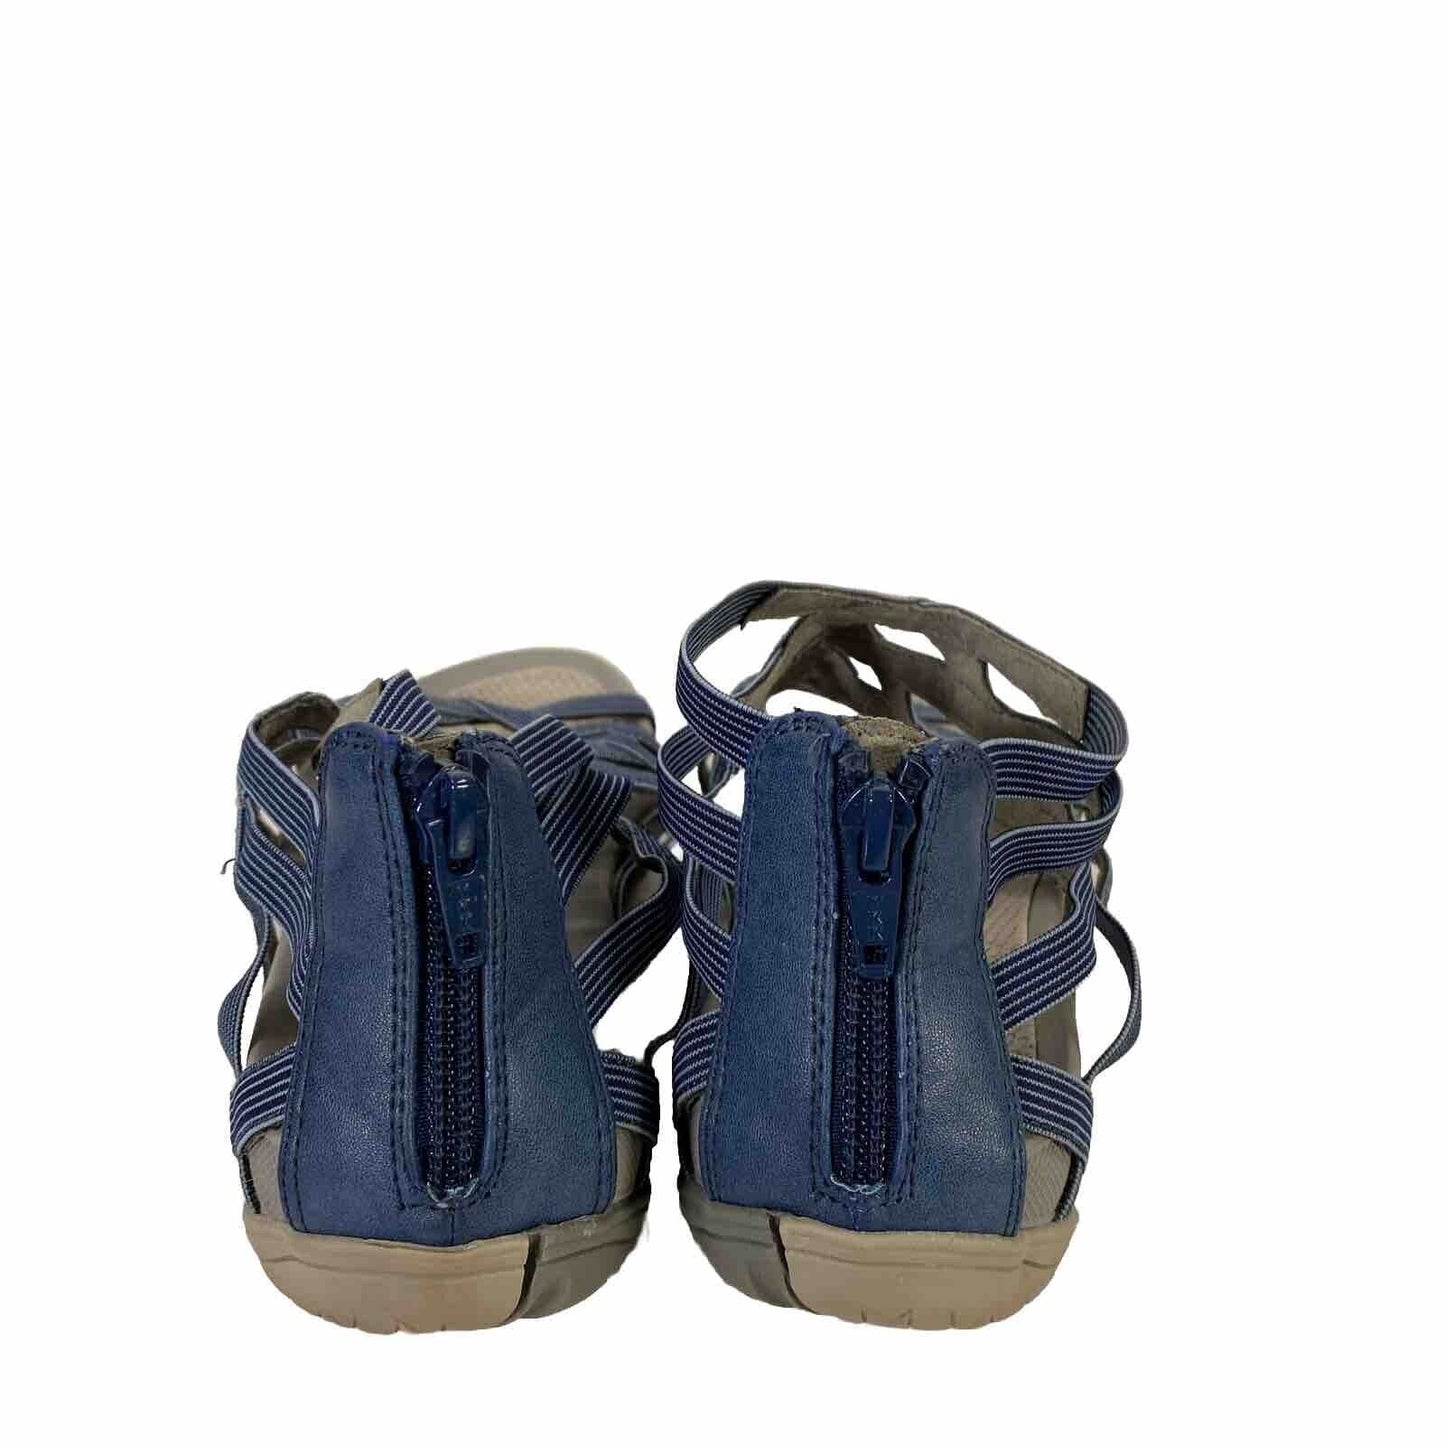 Baretraps Women's Blue Samina Strappy Gladiator Sport Sandals - 6.5